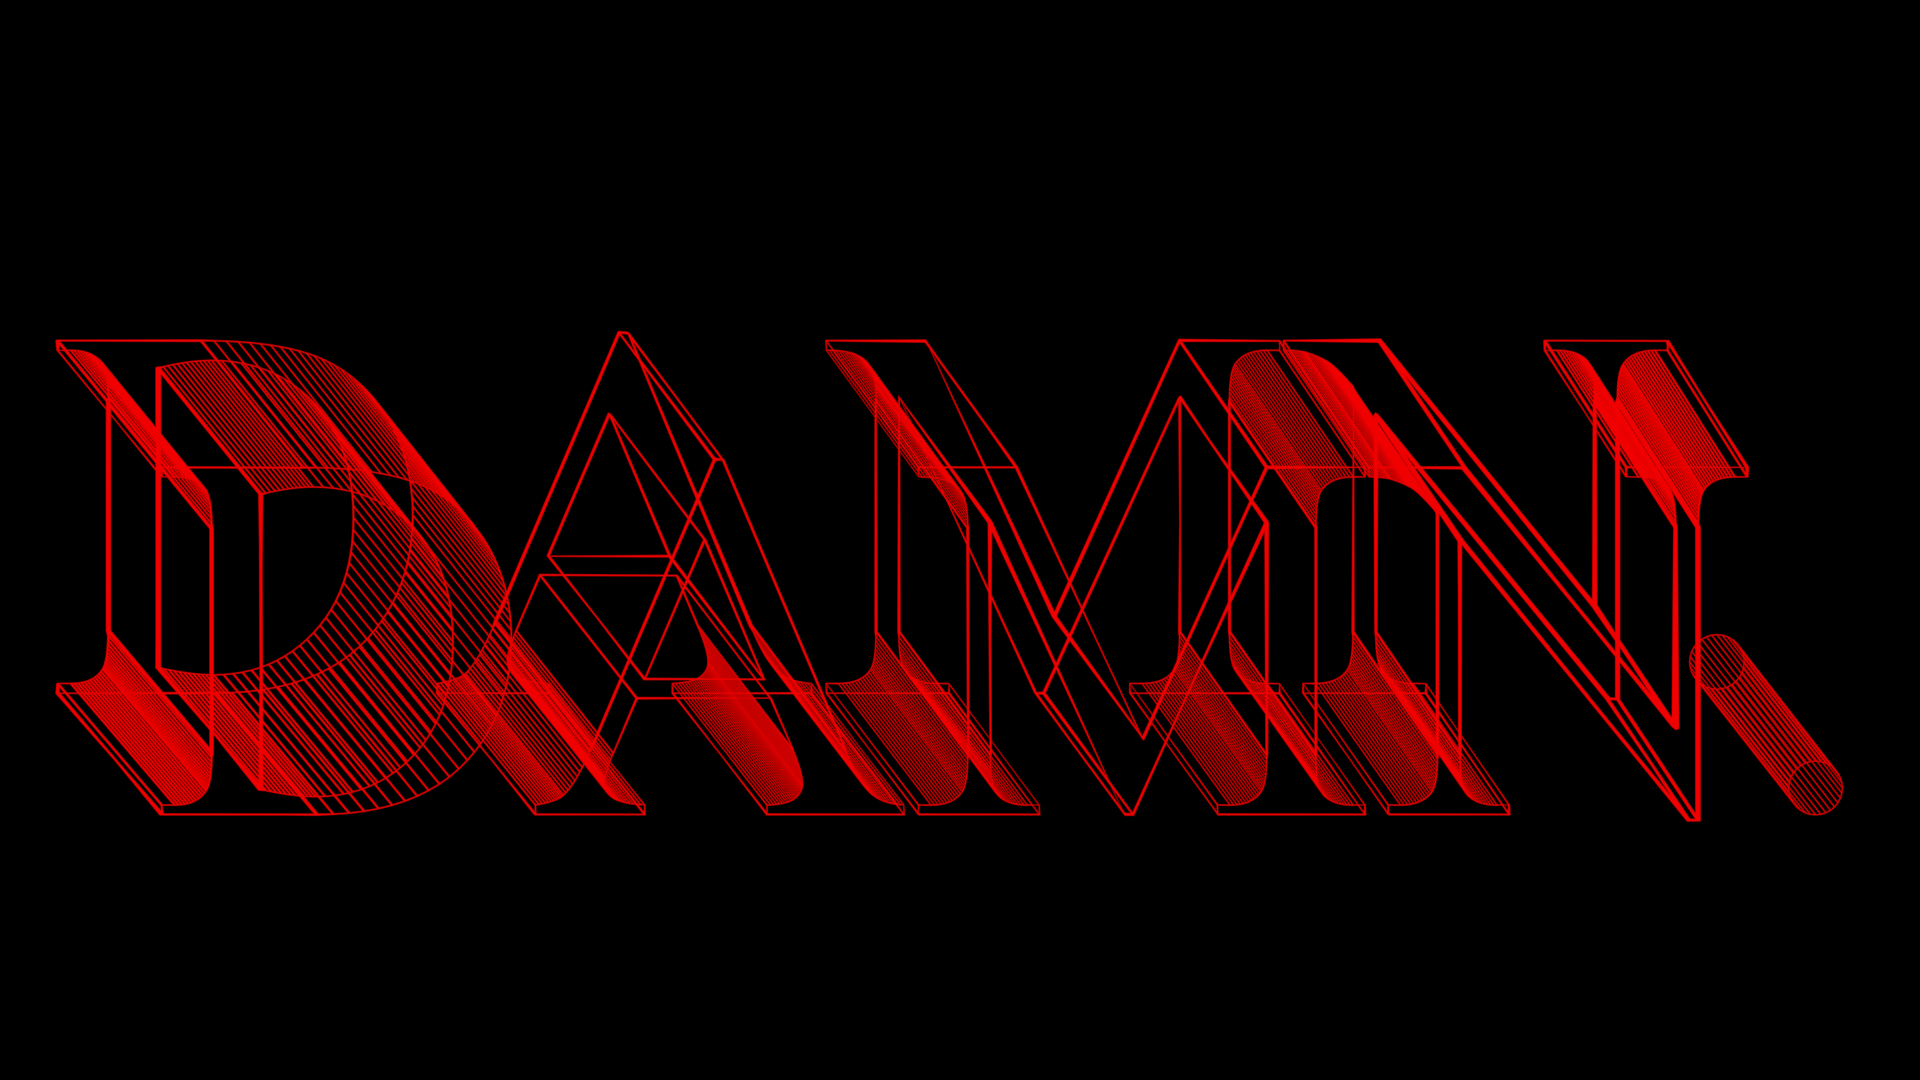 Damn Logo - My attempt to remake Kendrick Lamar's DAMN logo in blender